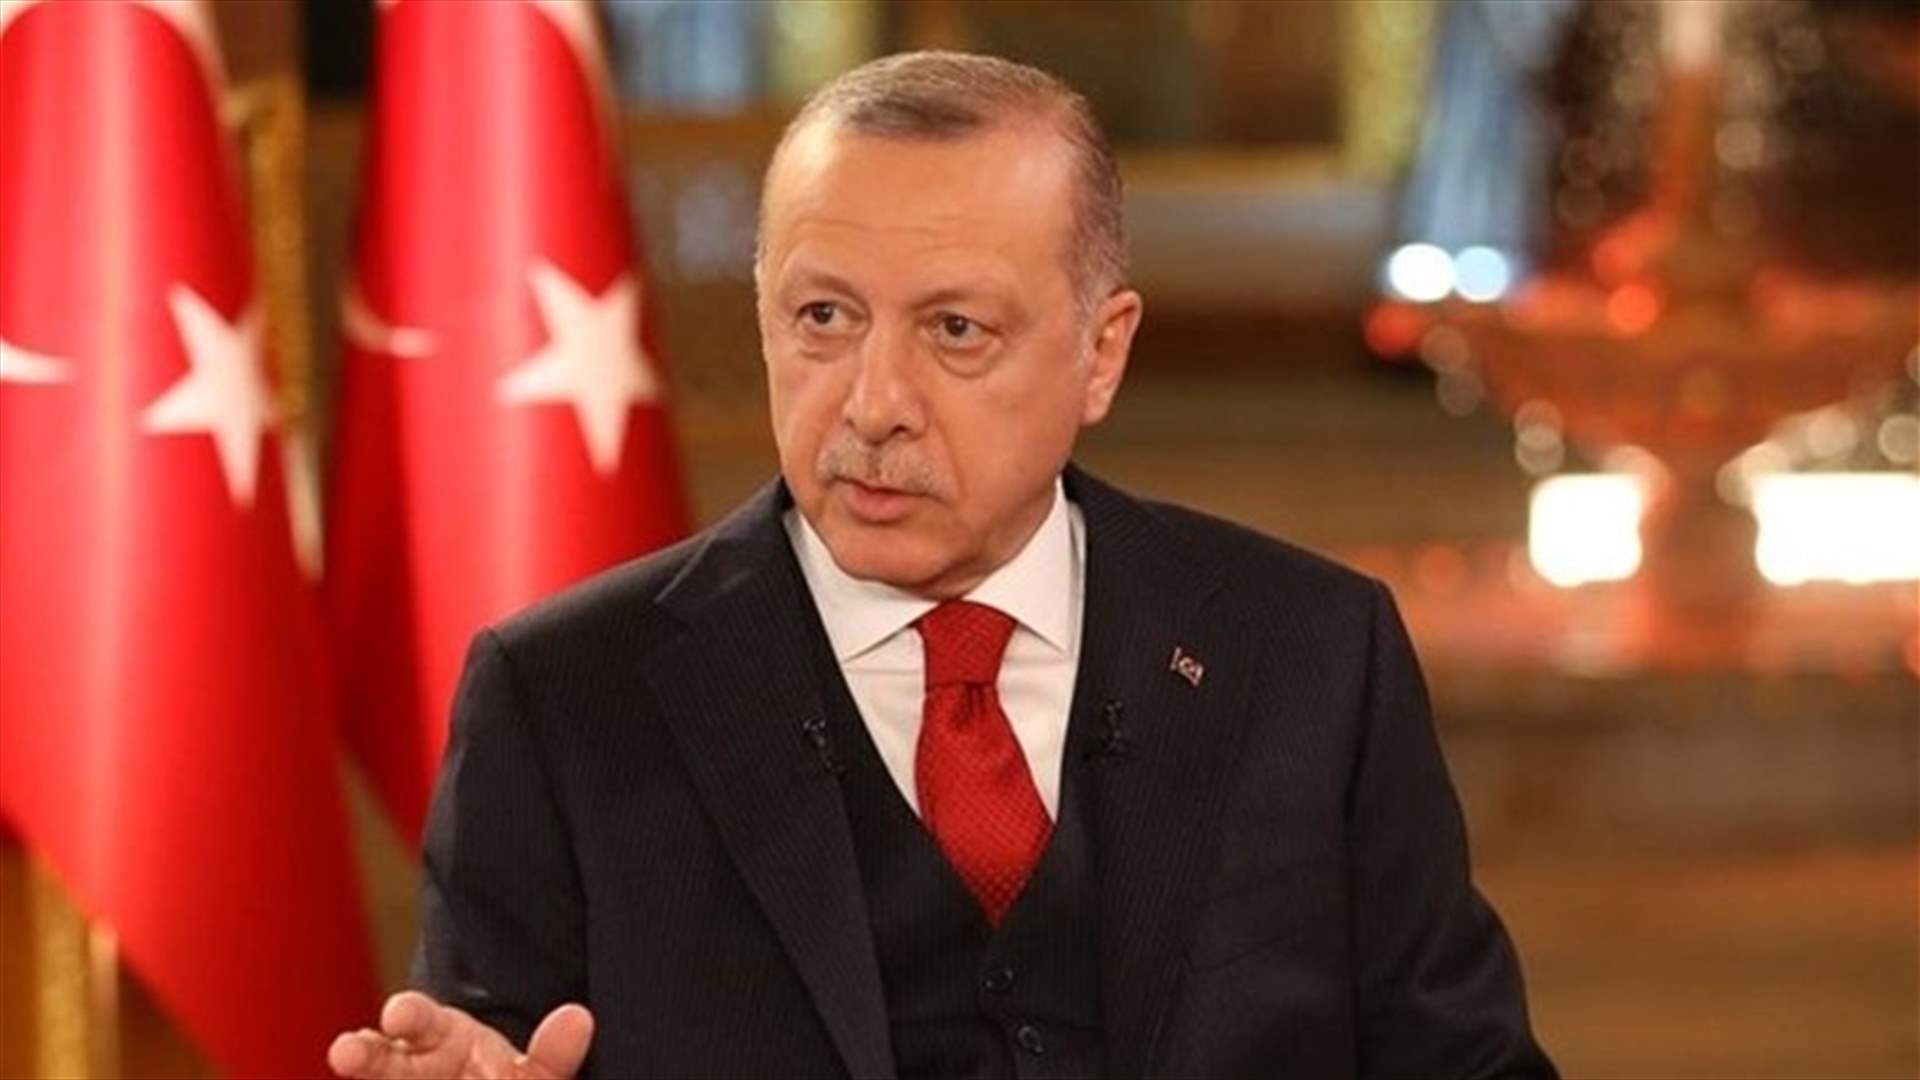 Erdogan says Turkey will increase military support to Libya if necessary